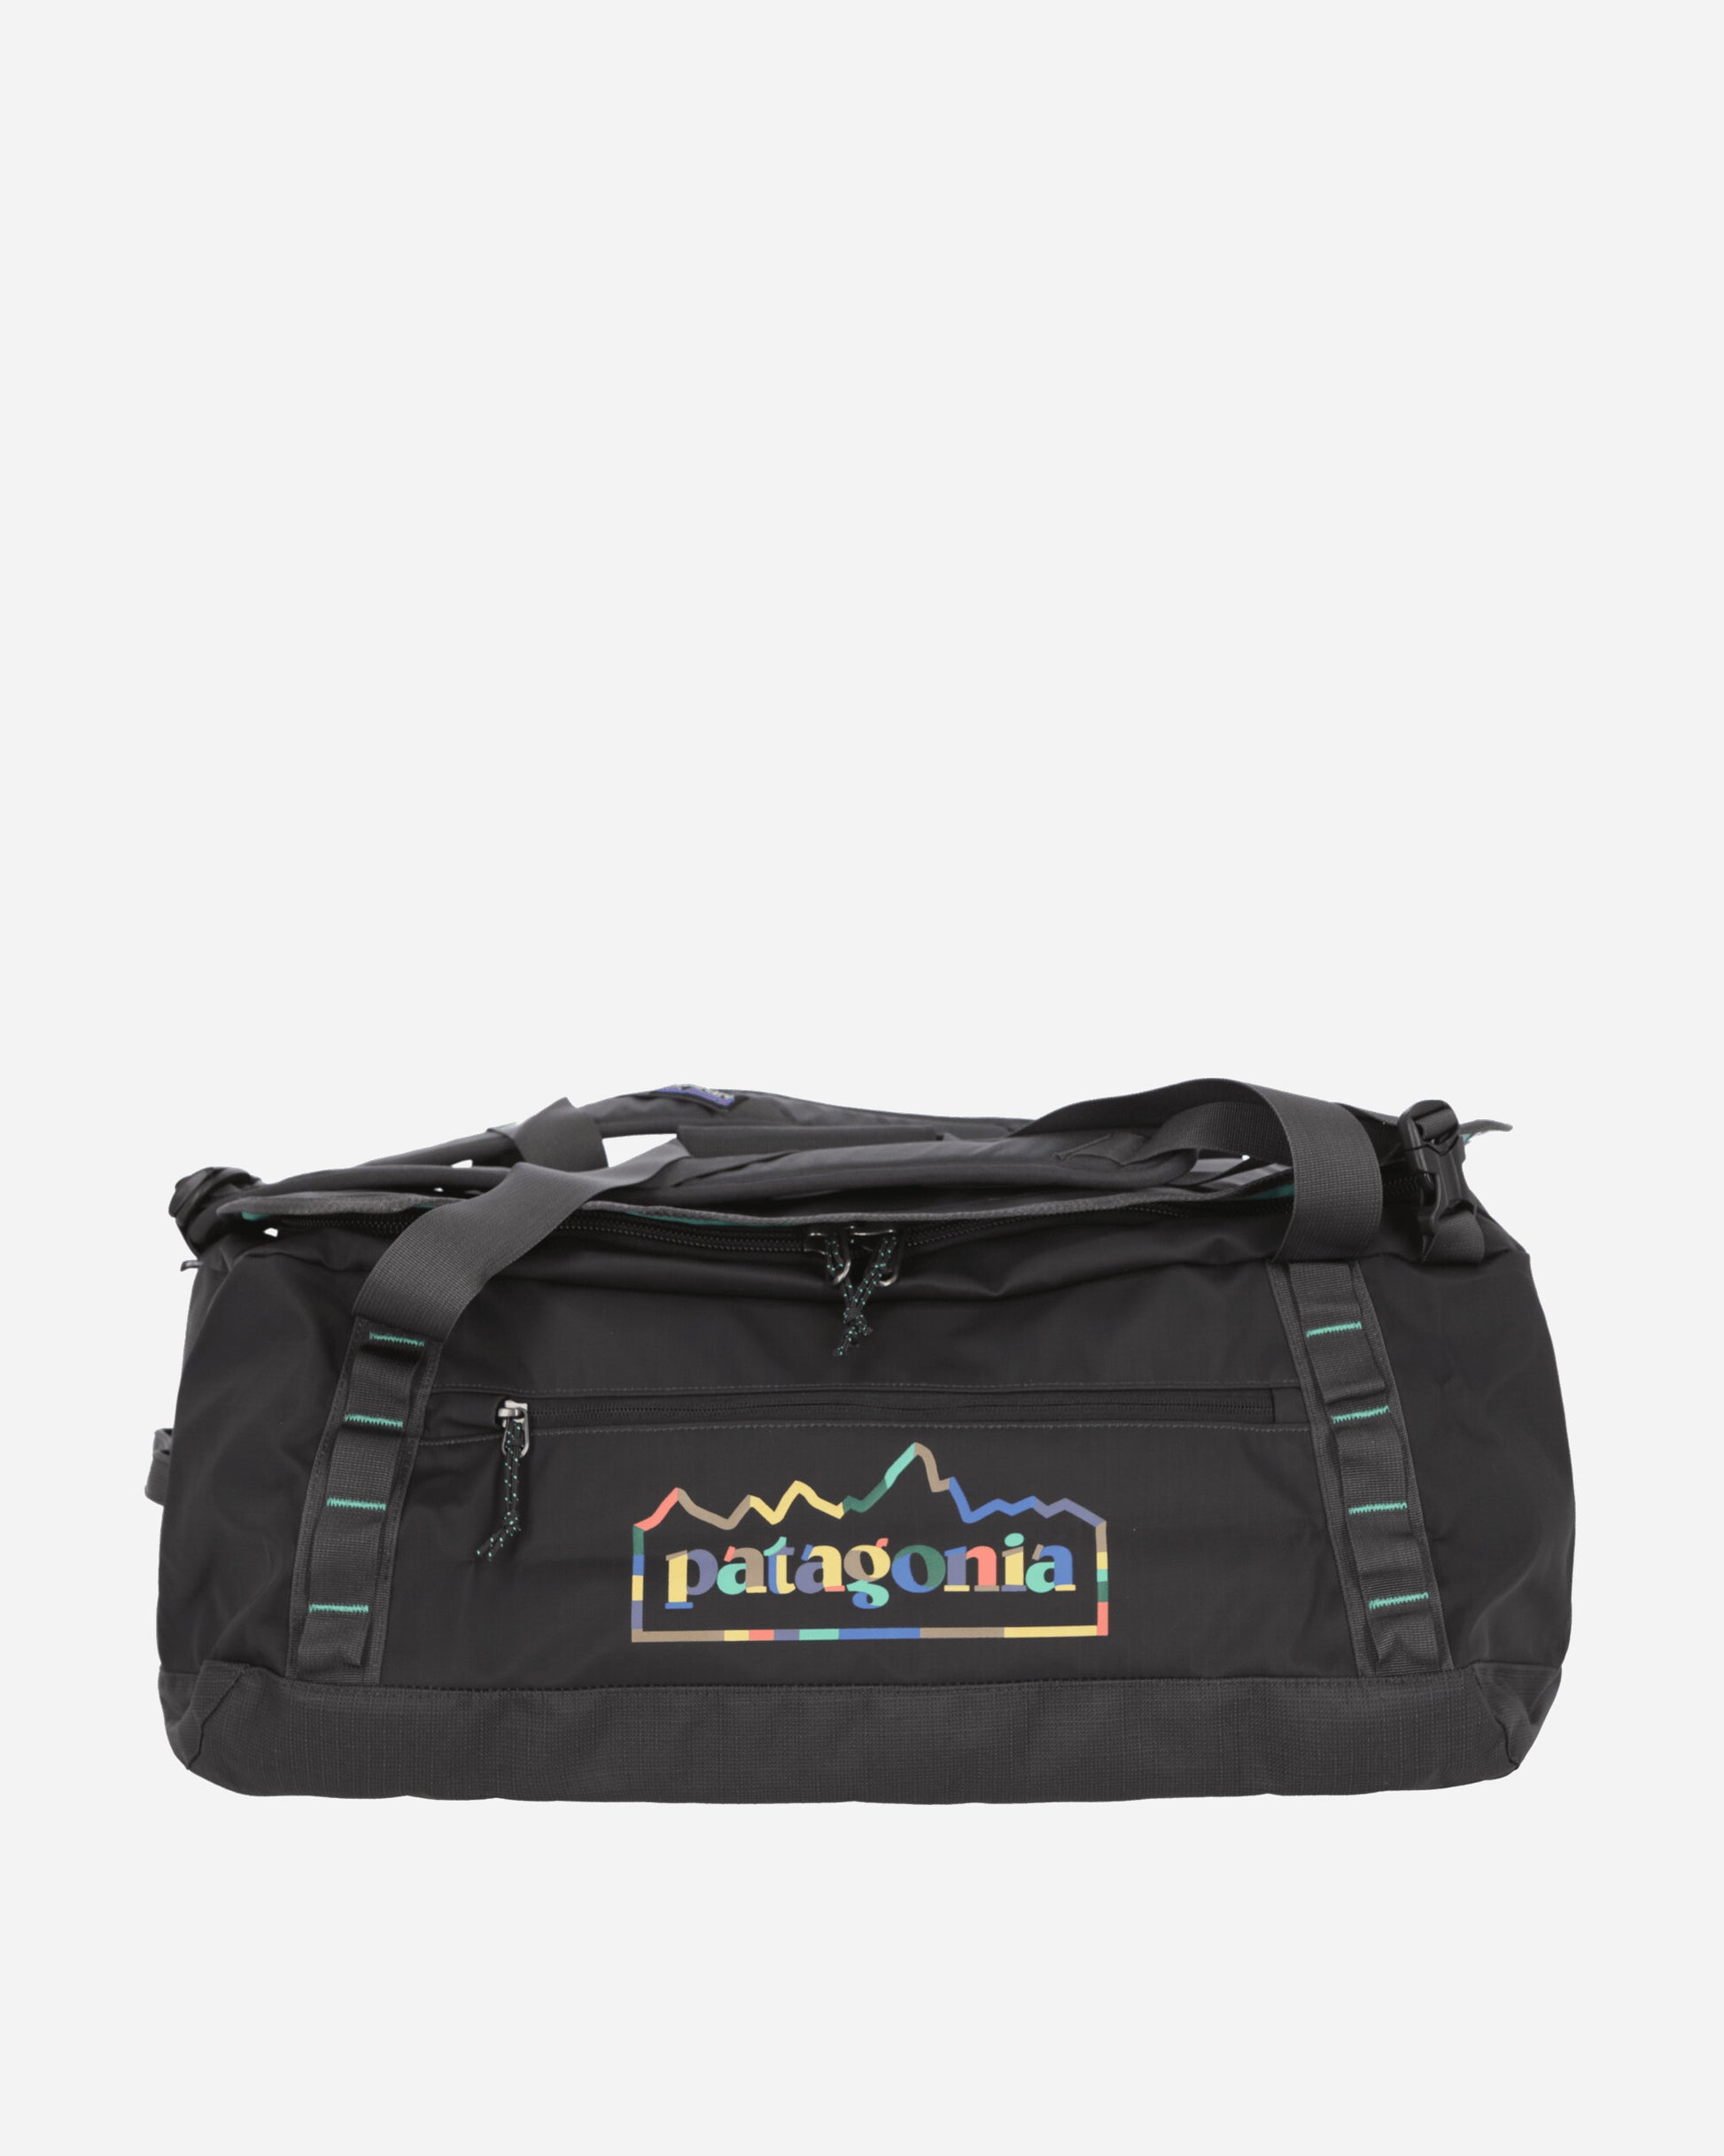 Patagonia Black Hole Duffel 55L Unity Fitz: Ink Black Bags and Backpacks Travel Bags 49343 UFIB